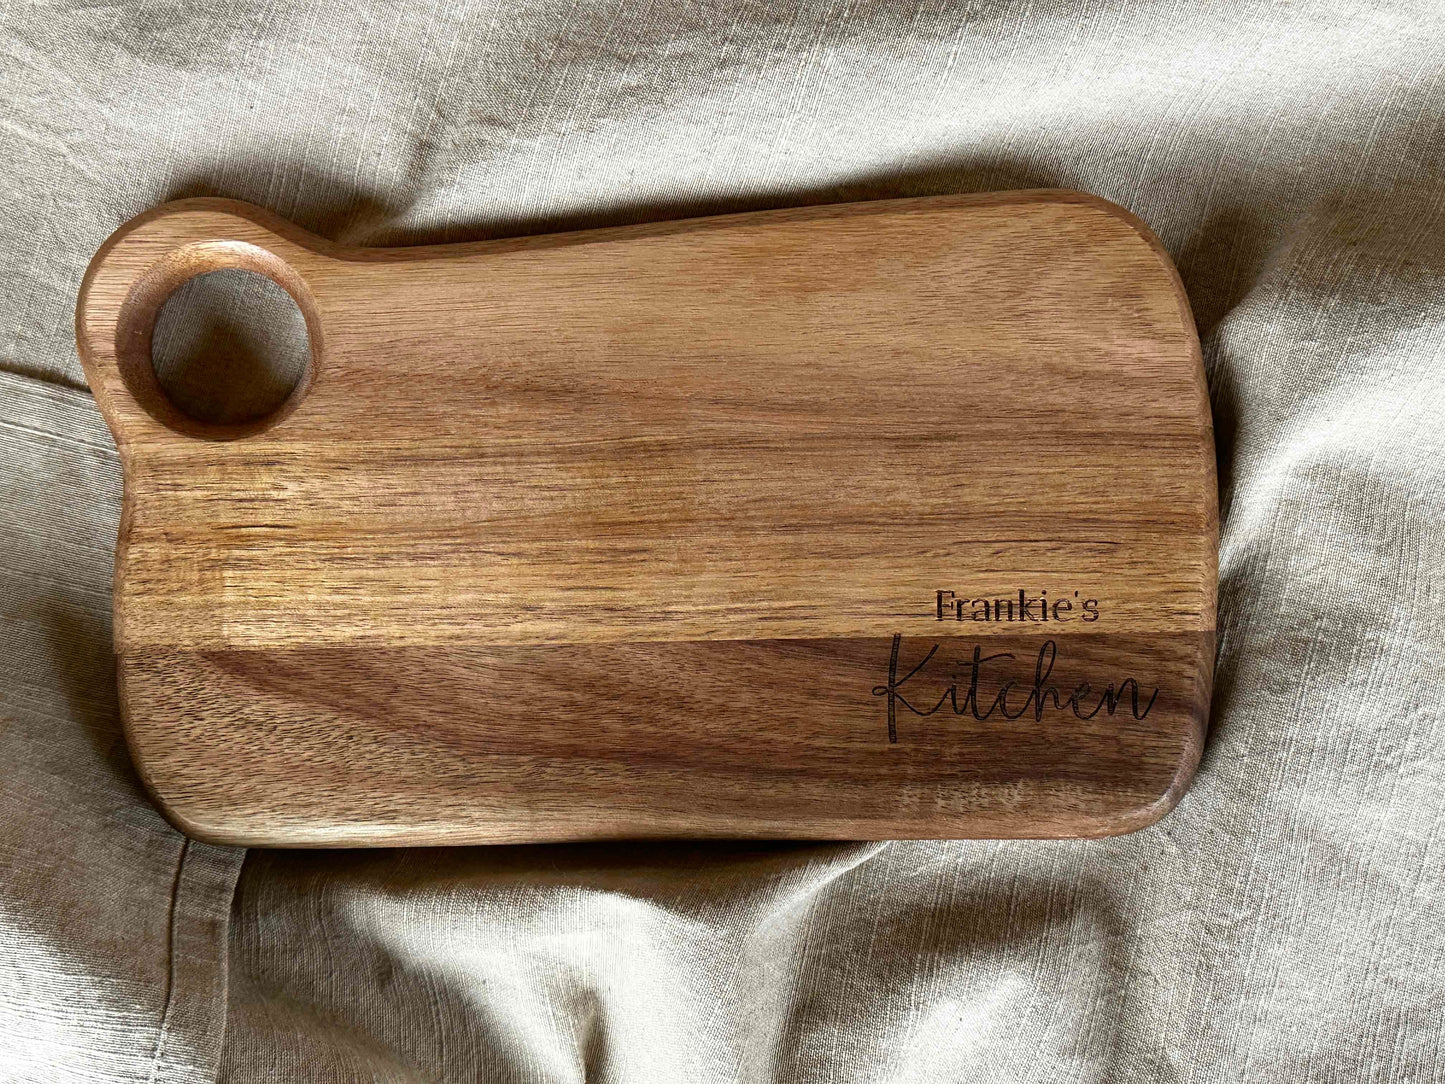 Oblong cutting board